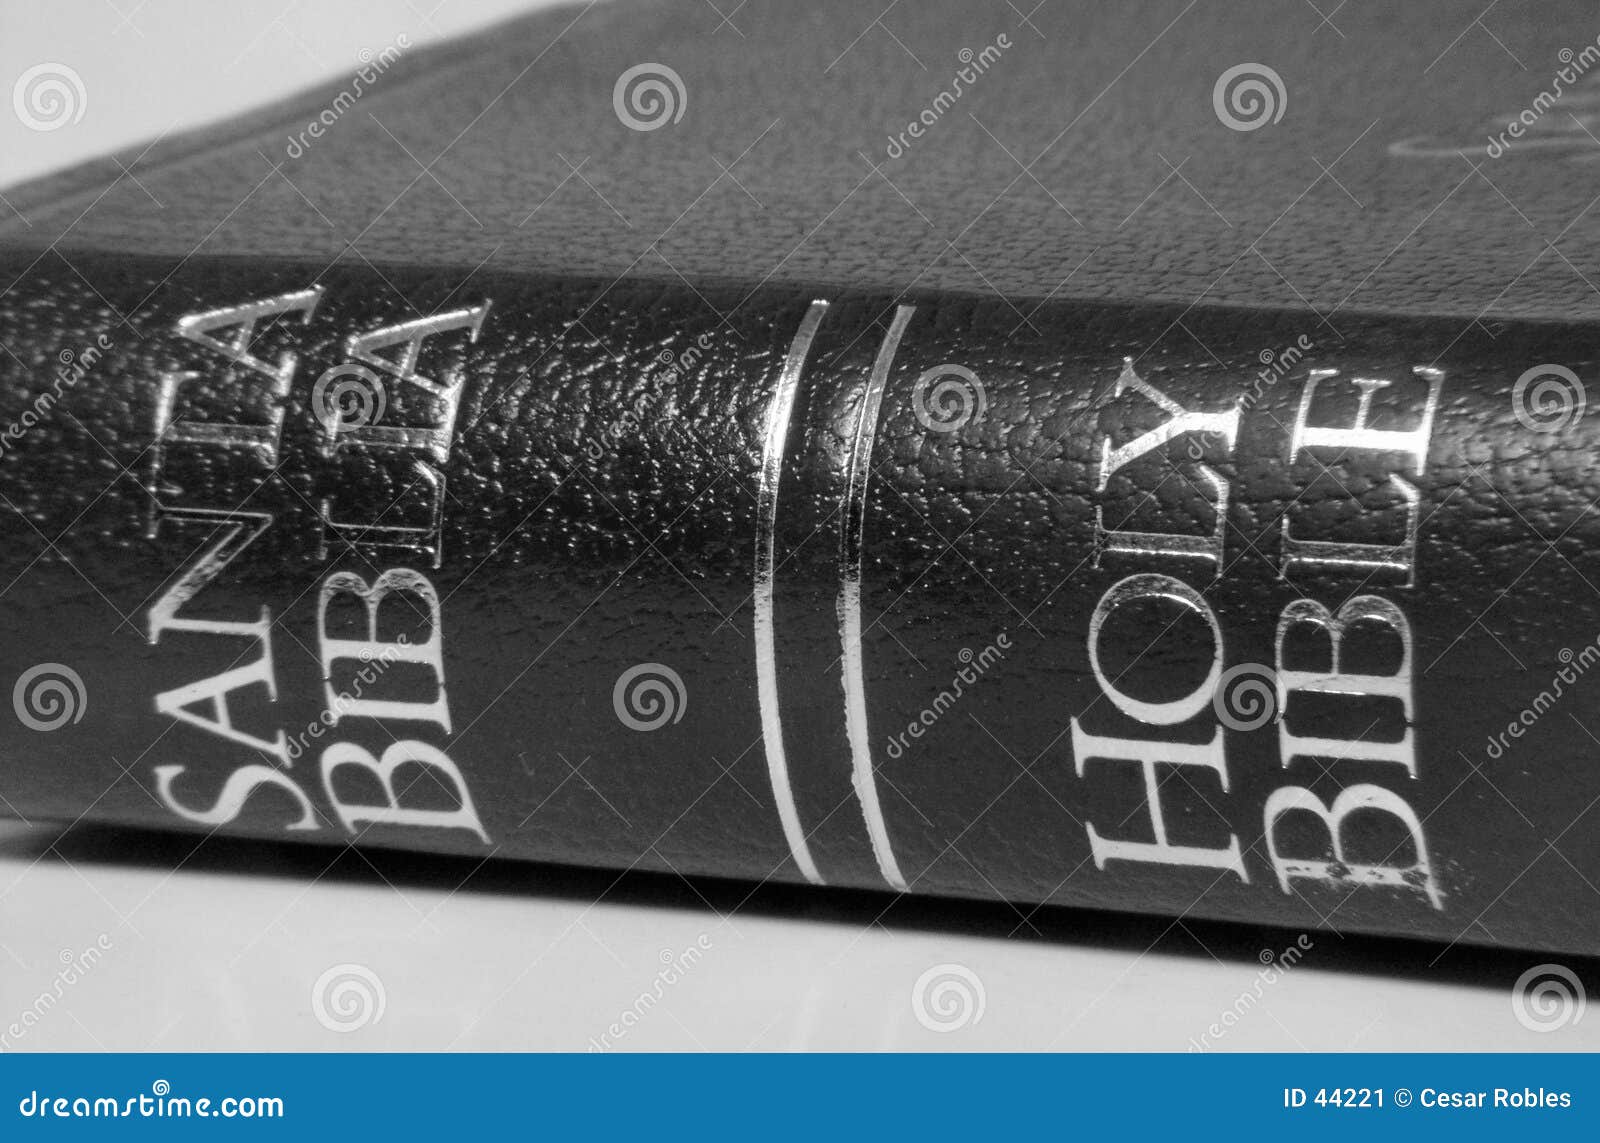 bilingual bible